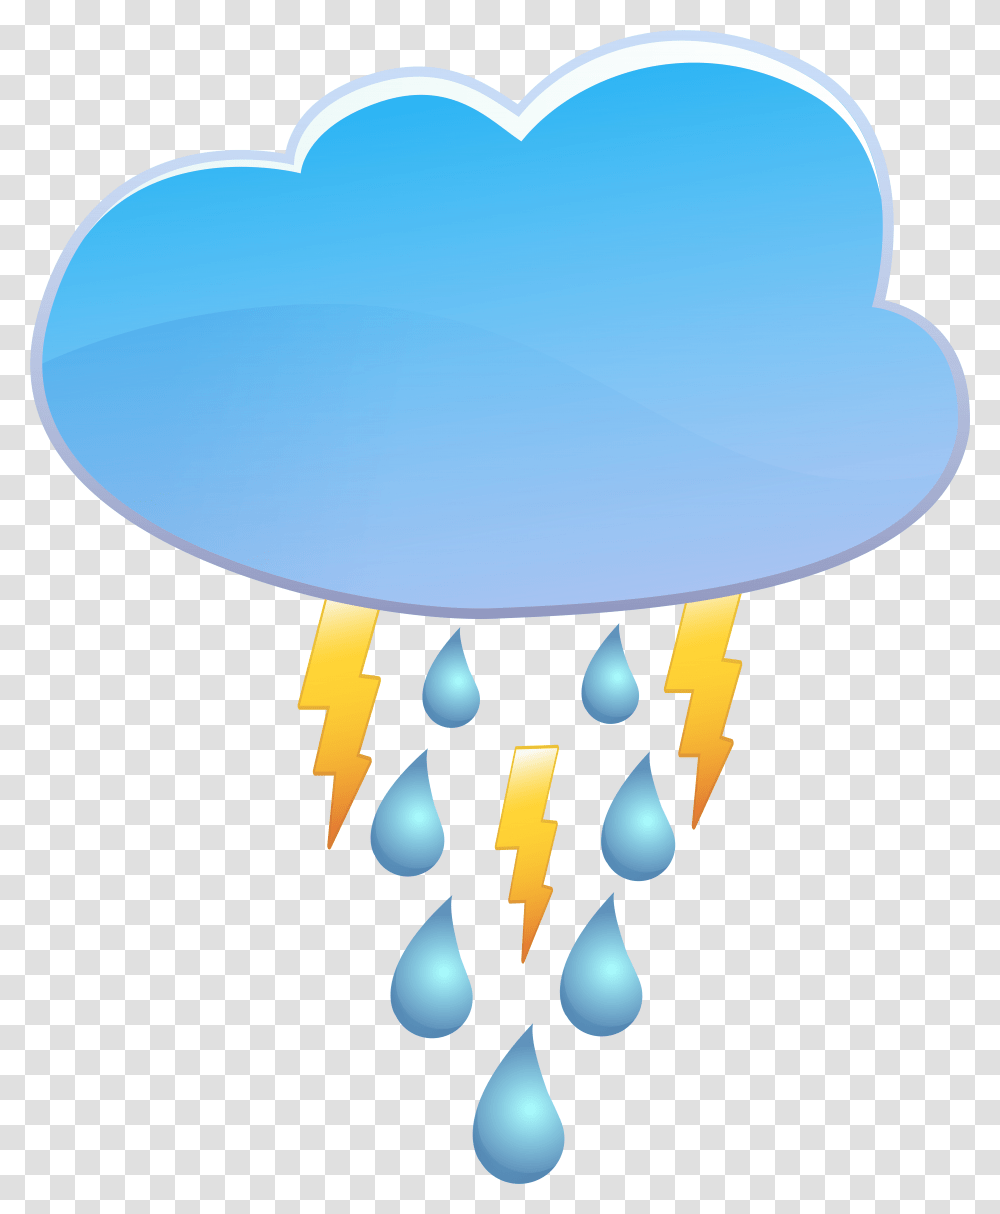 Cloud Rain And Thunder Weather Icon Clip Art, Lamp, Jellyfish, Invertebrate, Sea Life Transparent Png